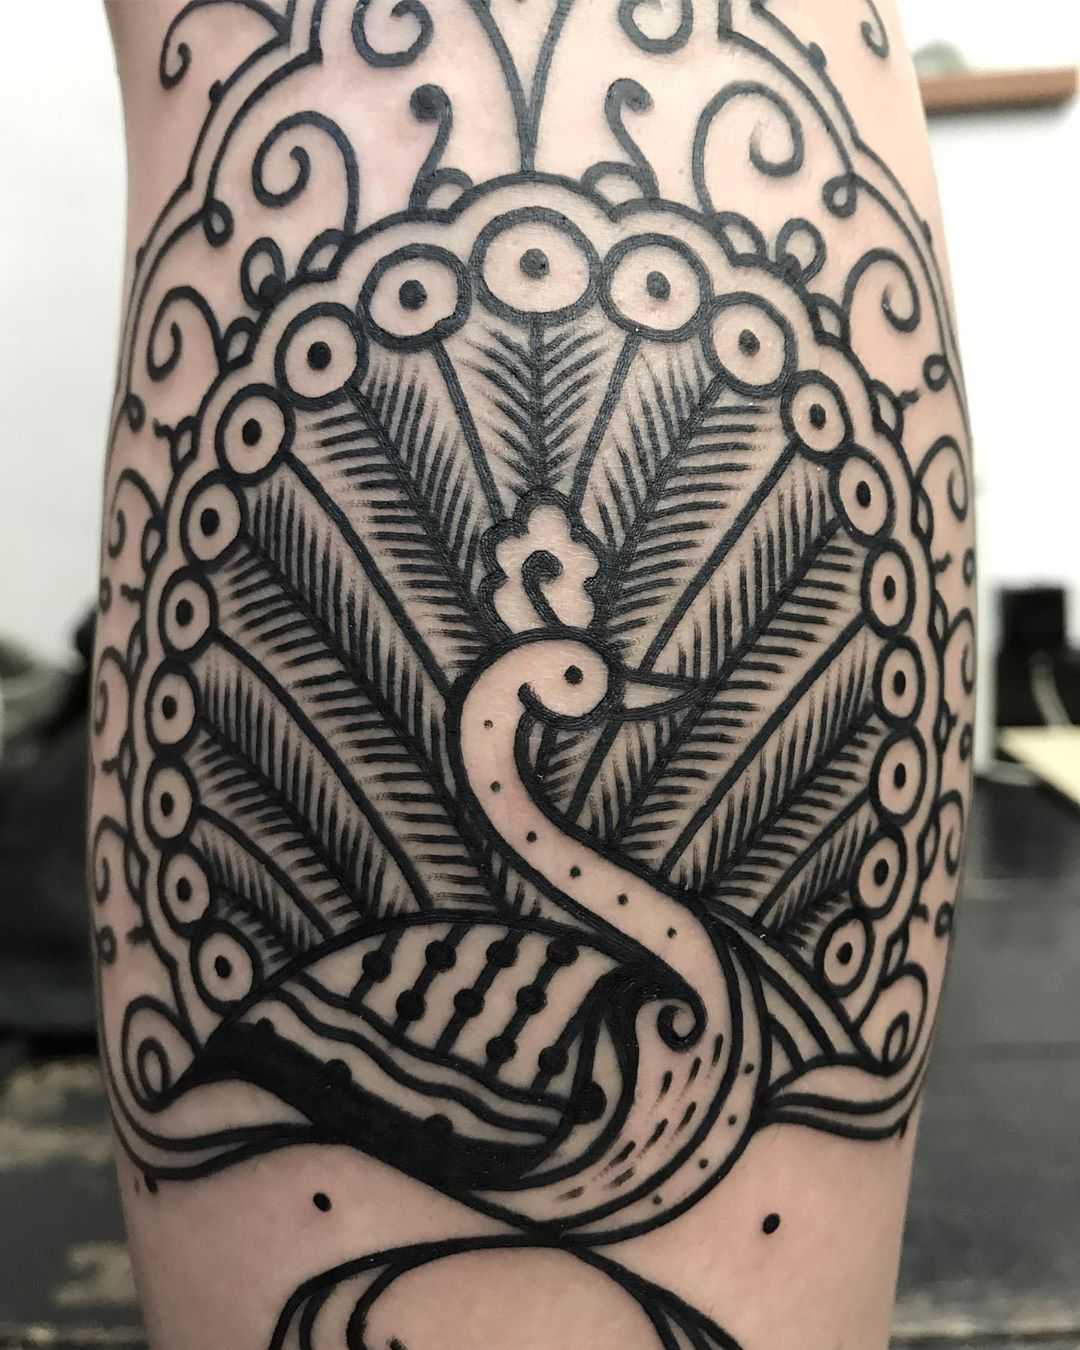 Peacock tattoo on the calf